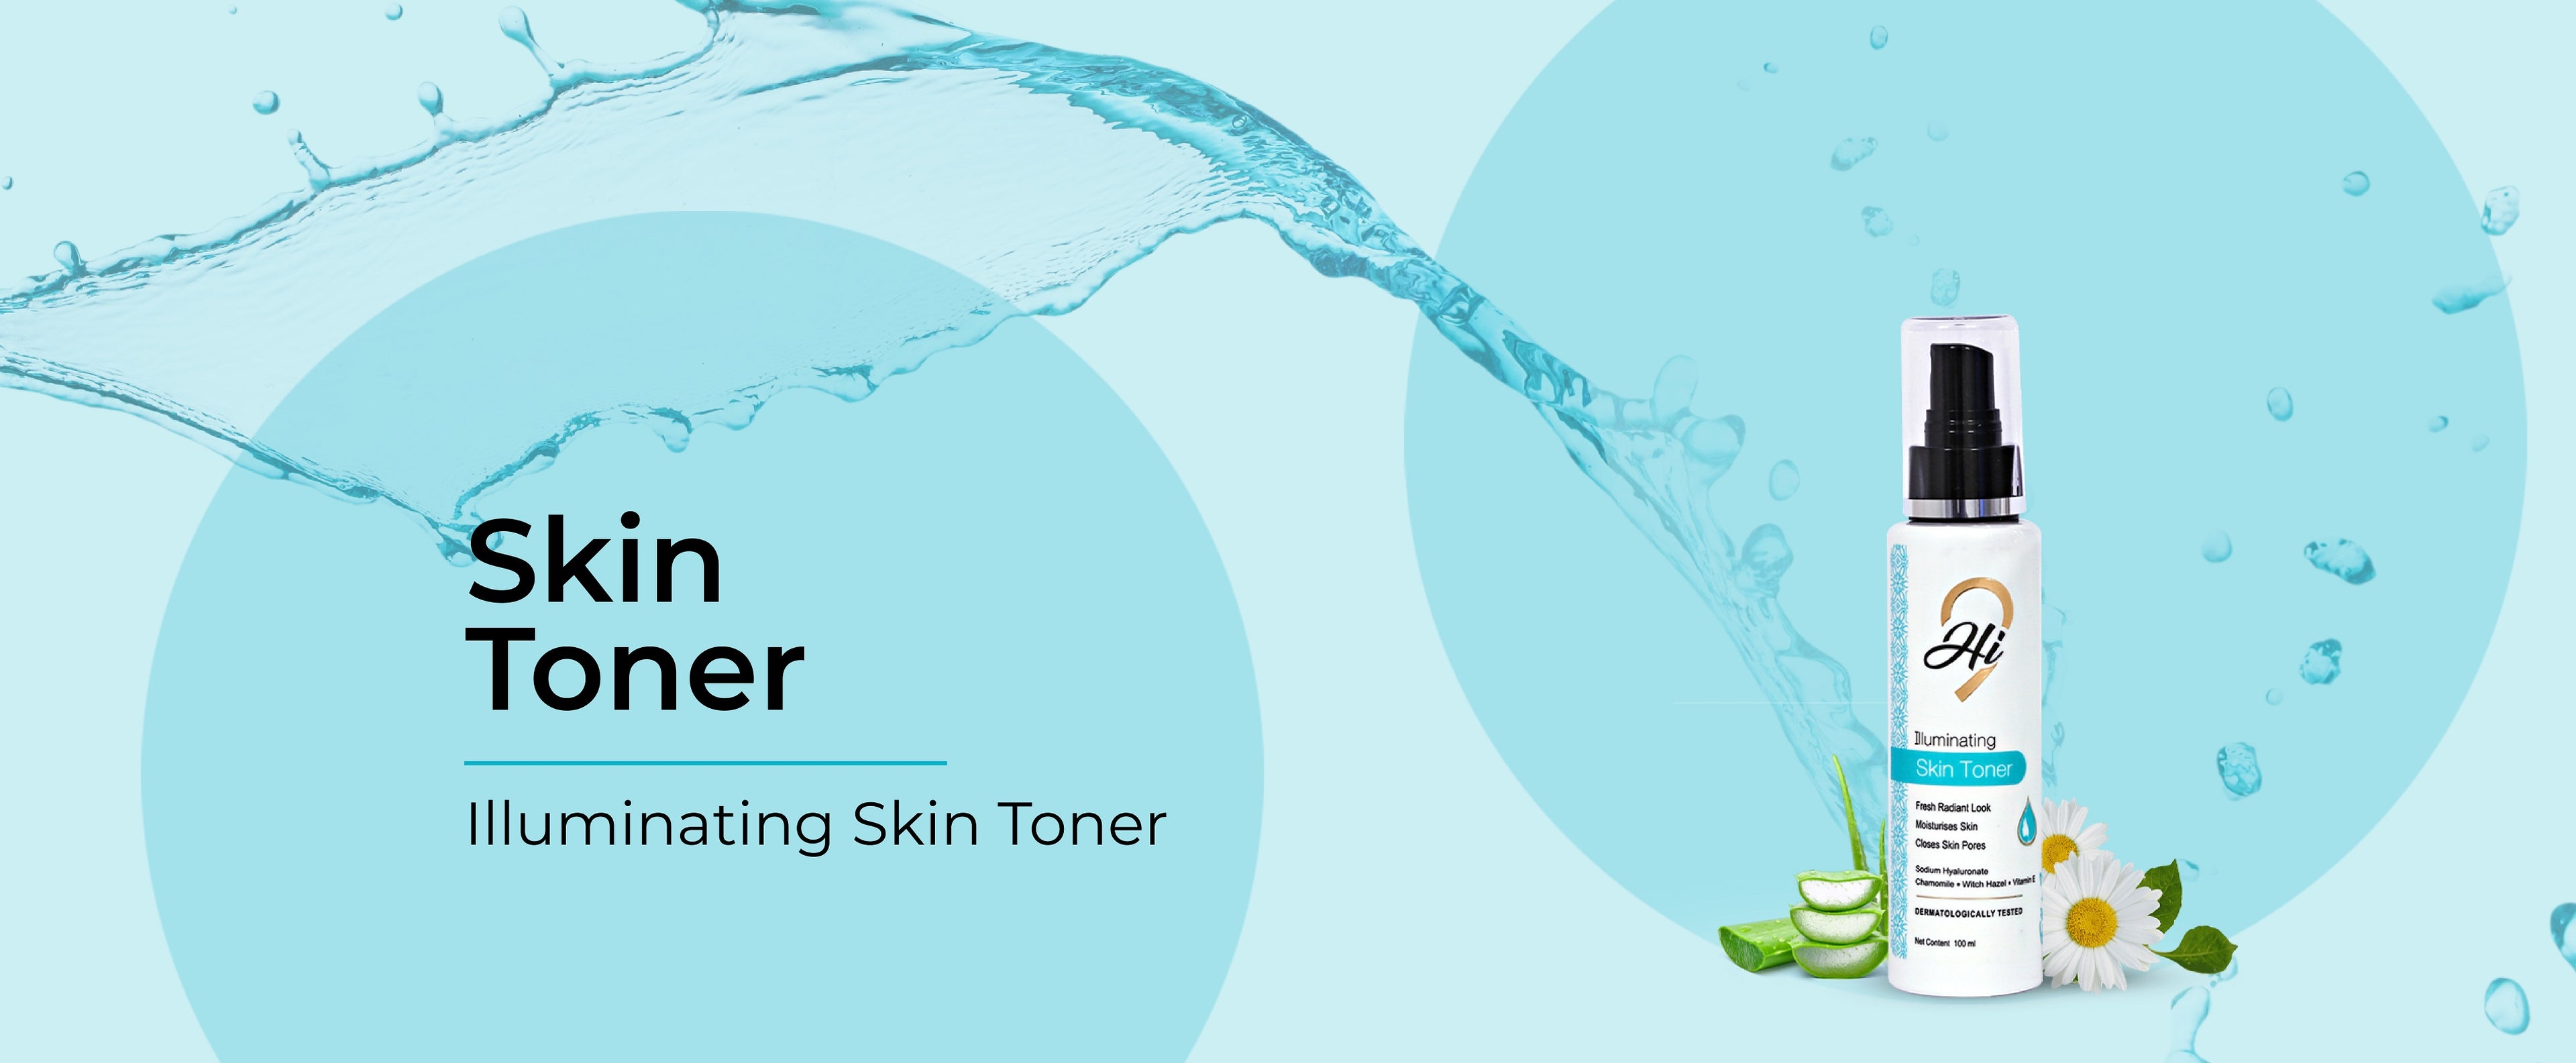 Hi9 Skin Toner Products Range